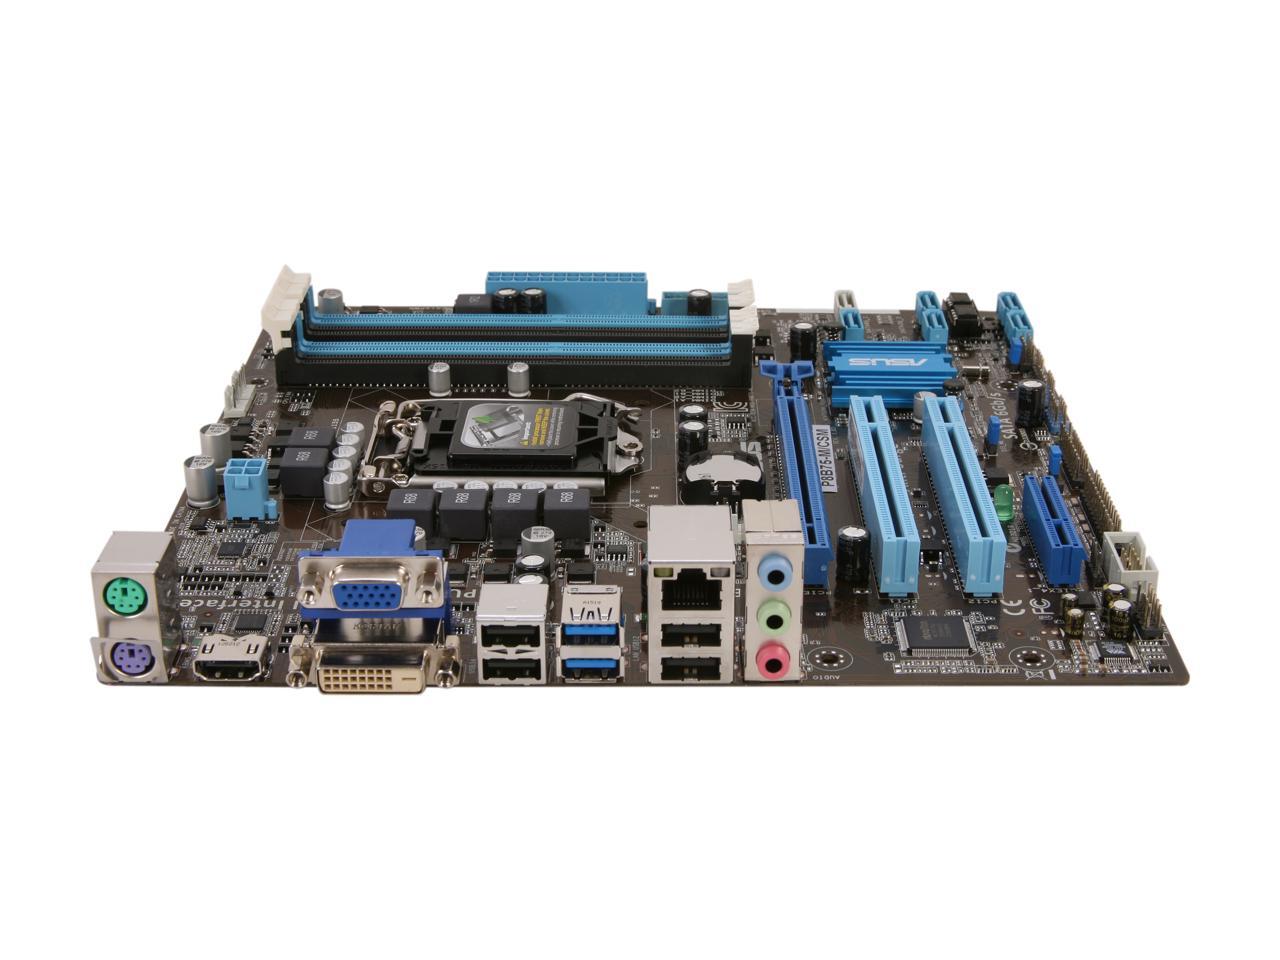 ASUS P8B75-M/CSM LGA 1155 Intel B75 HDMI SATA 6Gb/s USB 3.0 Micro ATX Intel Motherboard